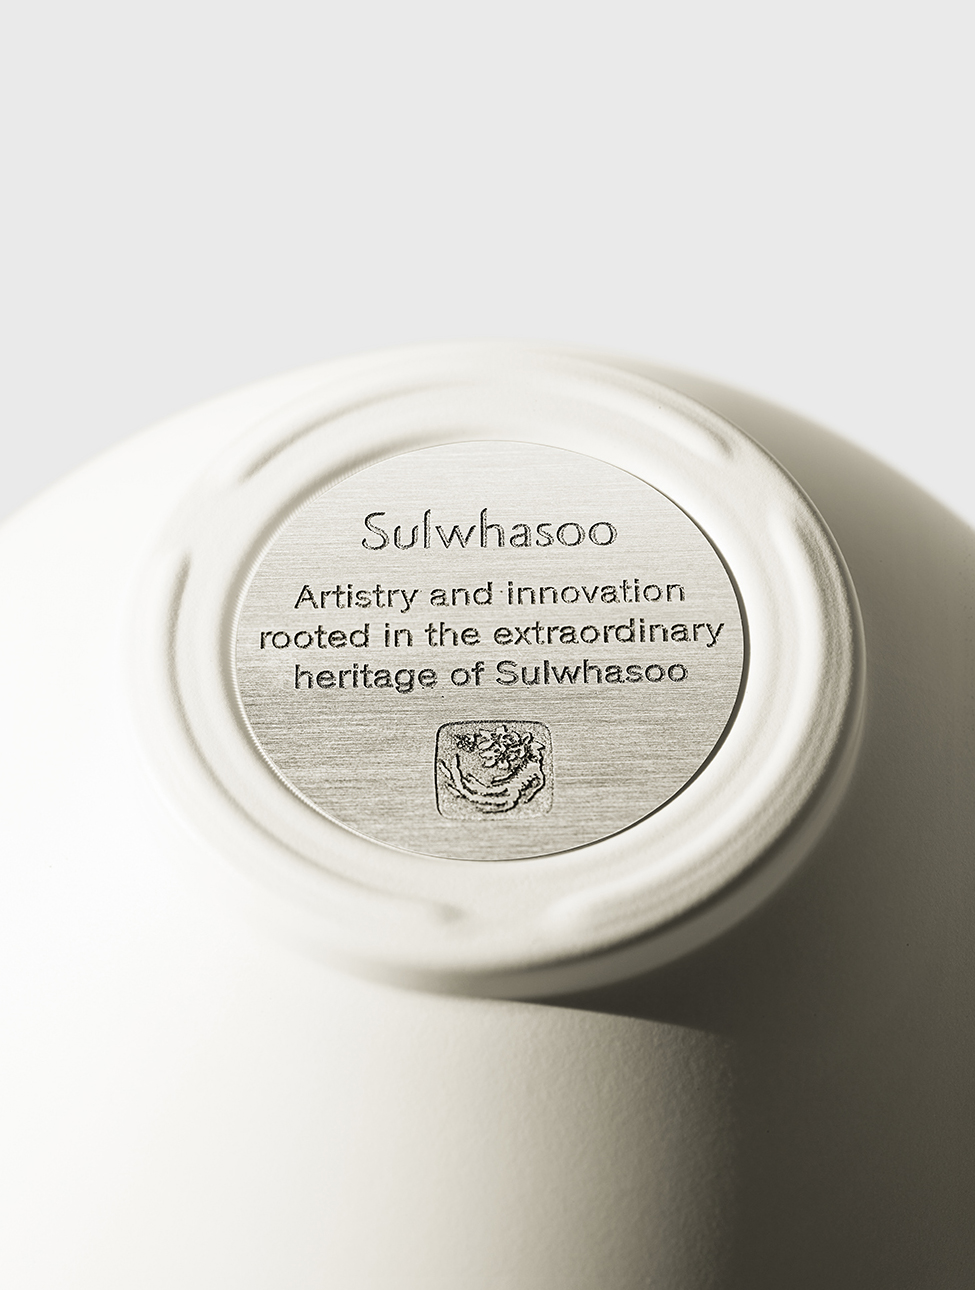 Sulwhasoo The Ultimate S Cream